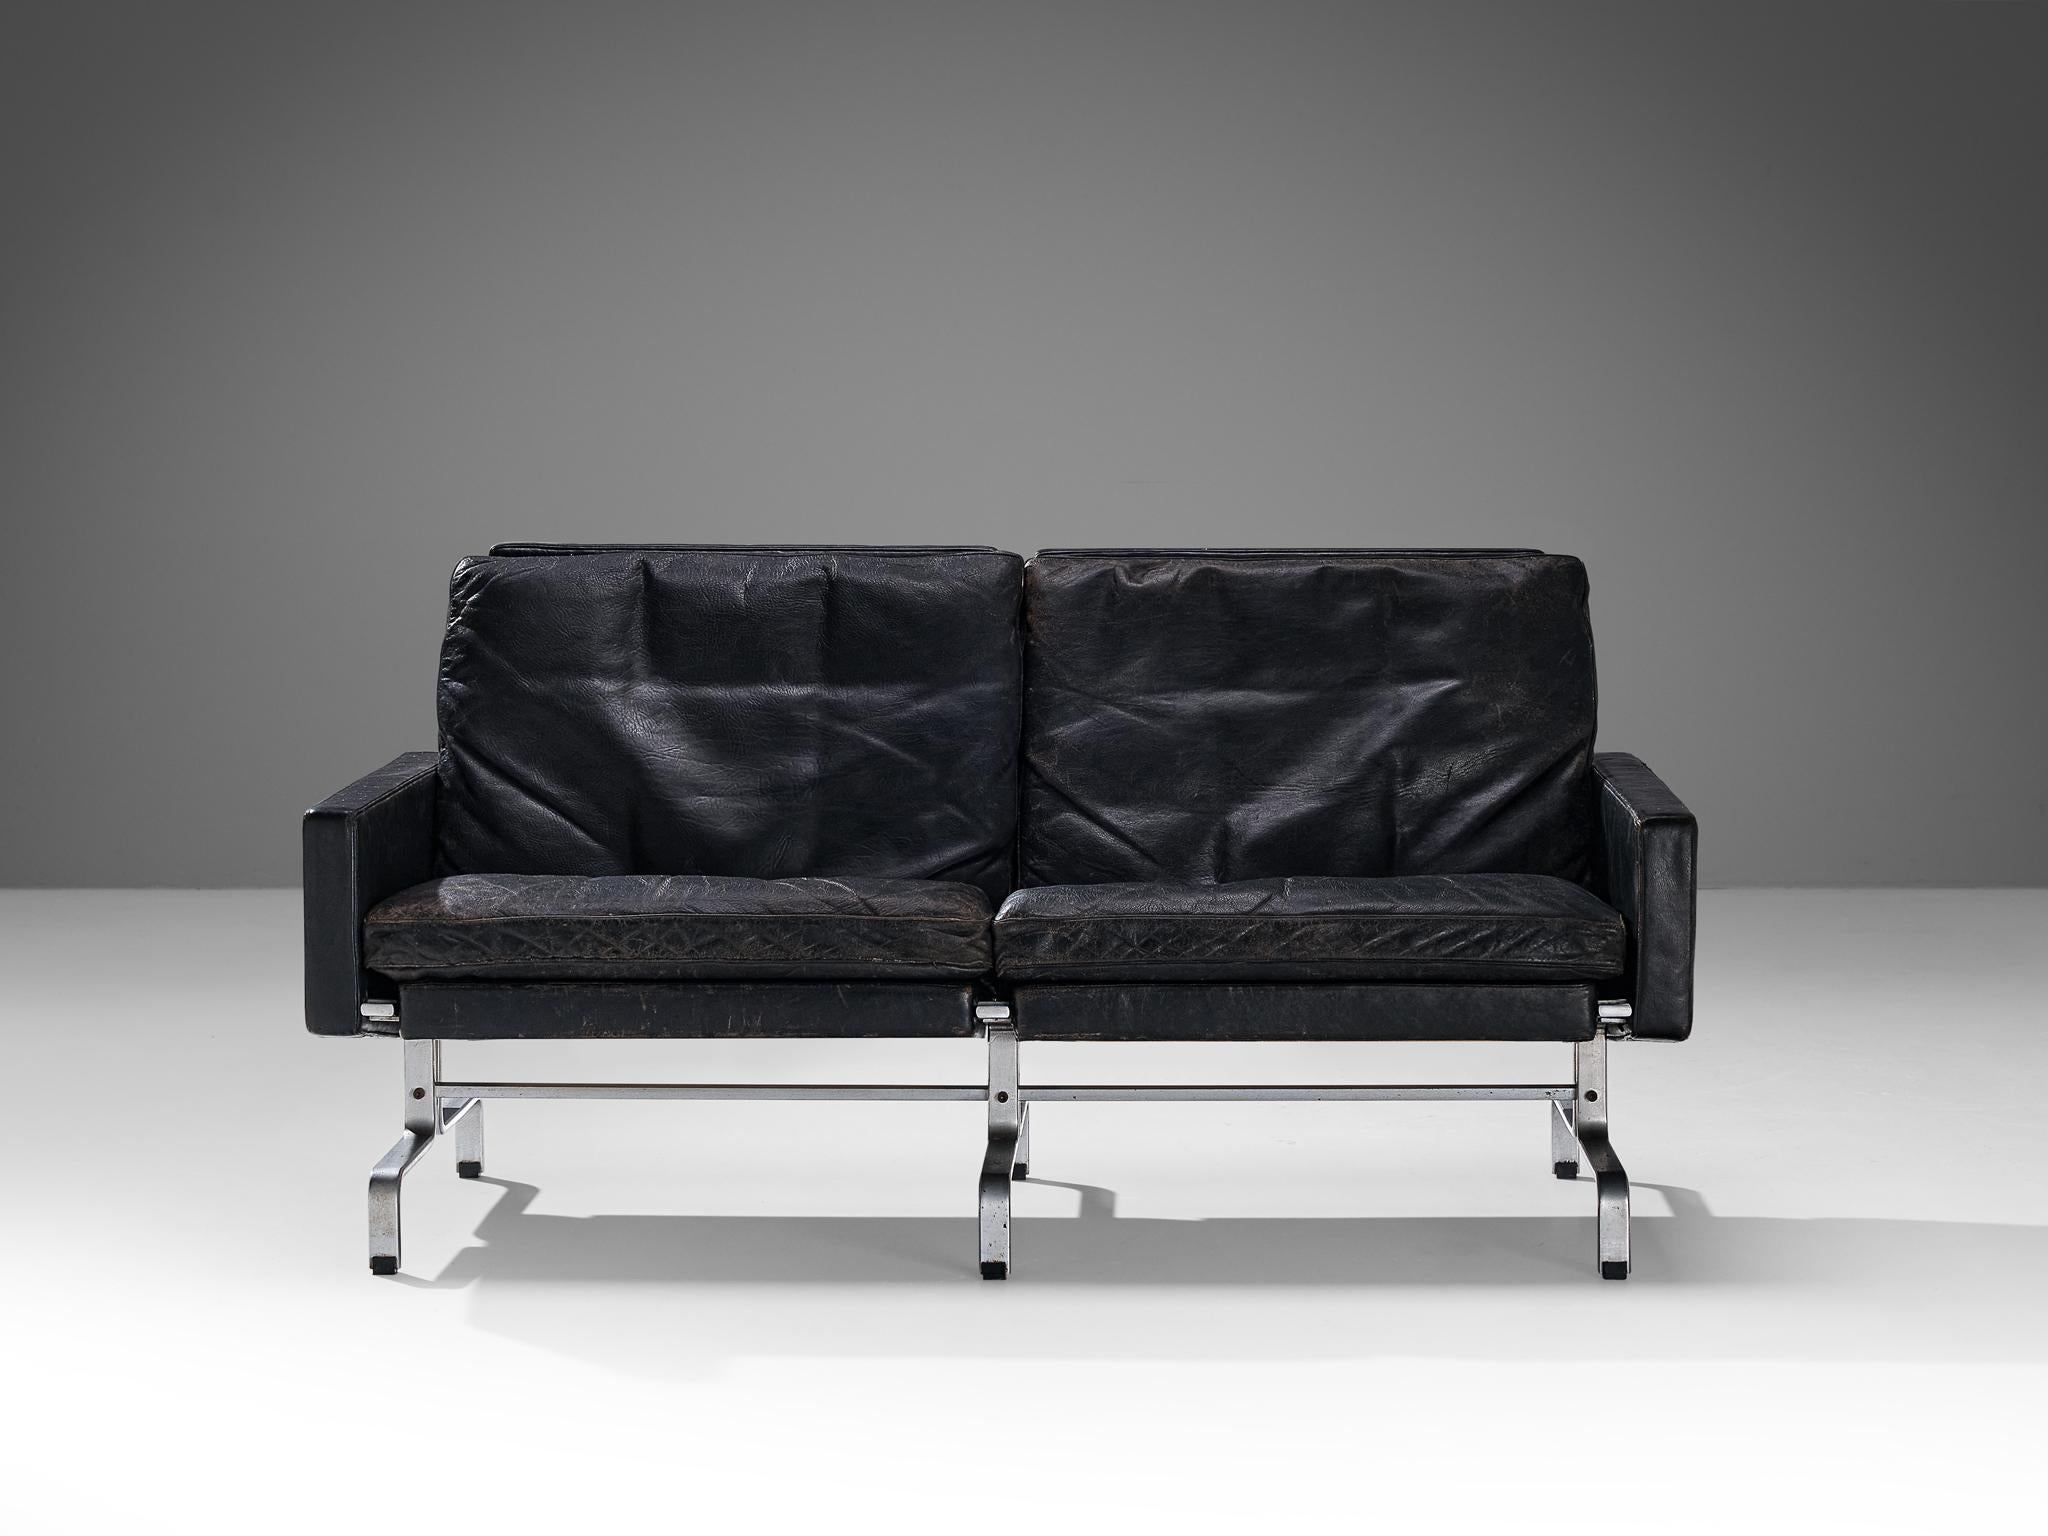 Metal Poul Kjaerholm 'PK31' Sofa in Black Leather For Sale